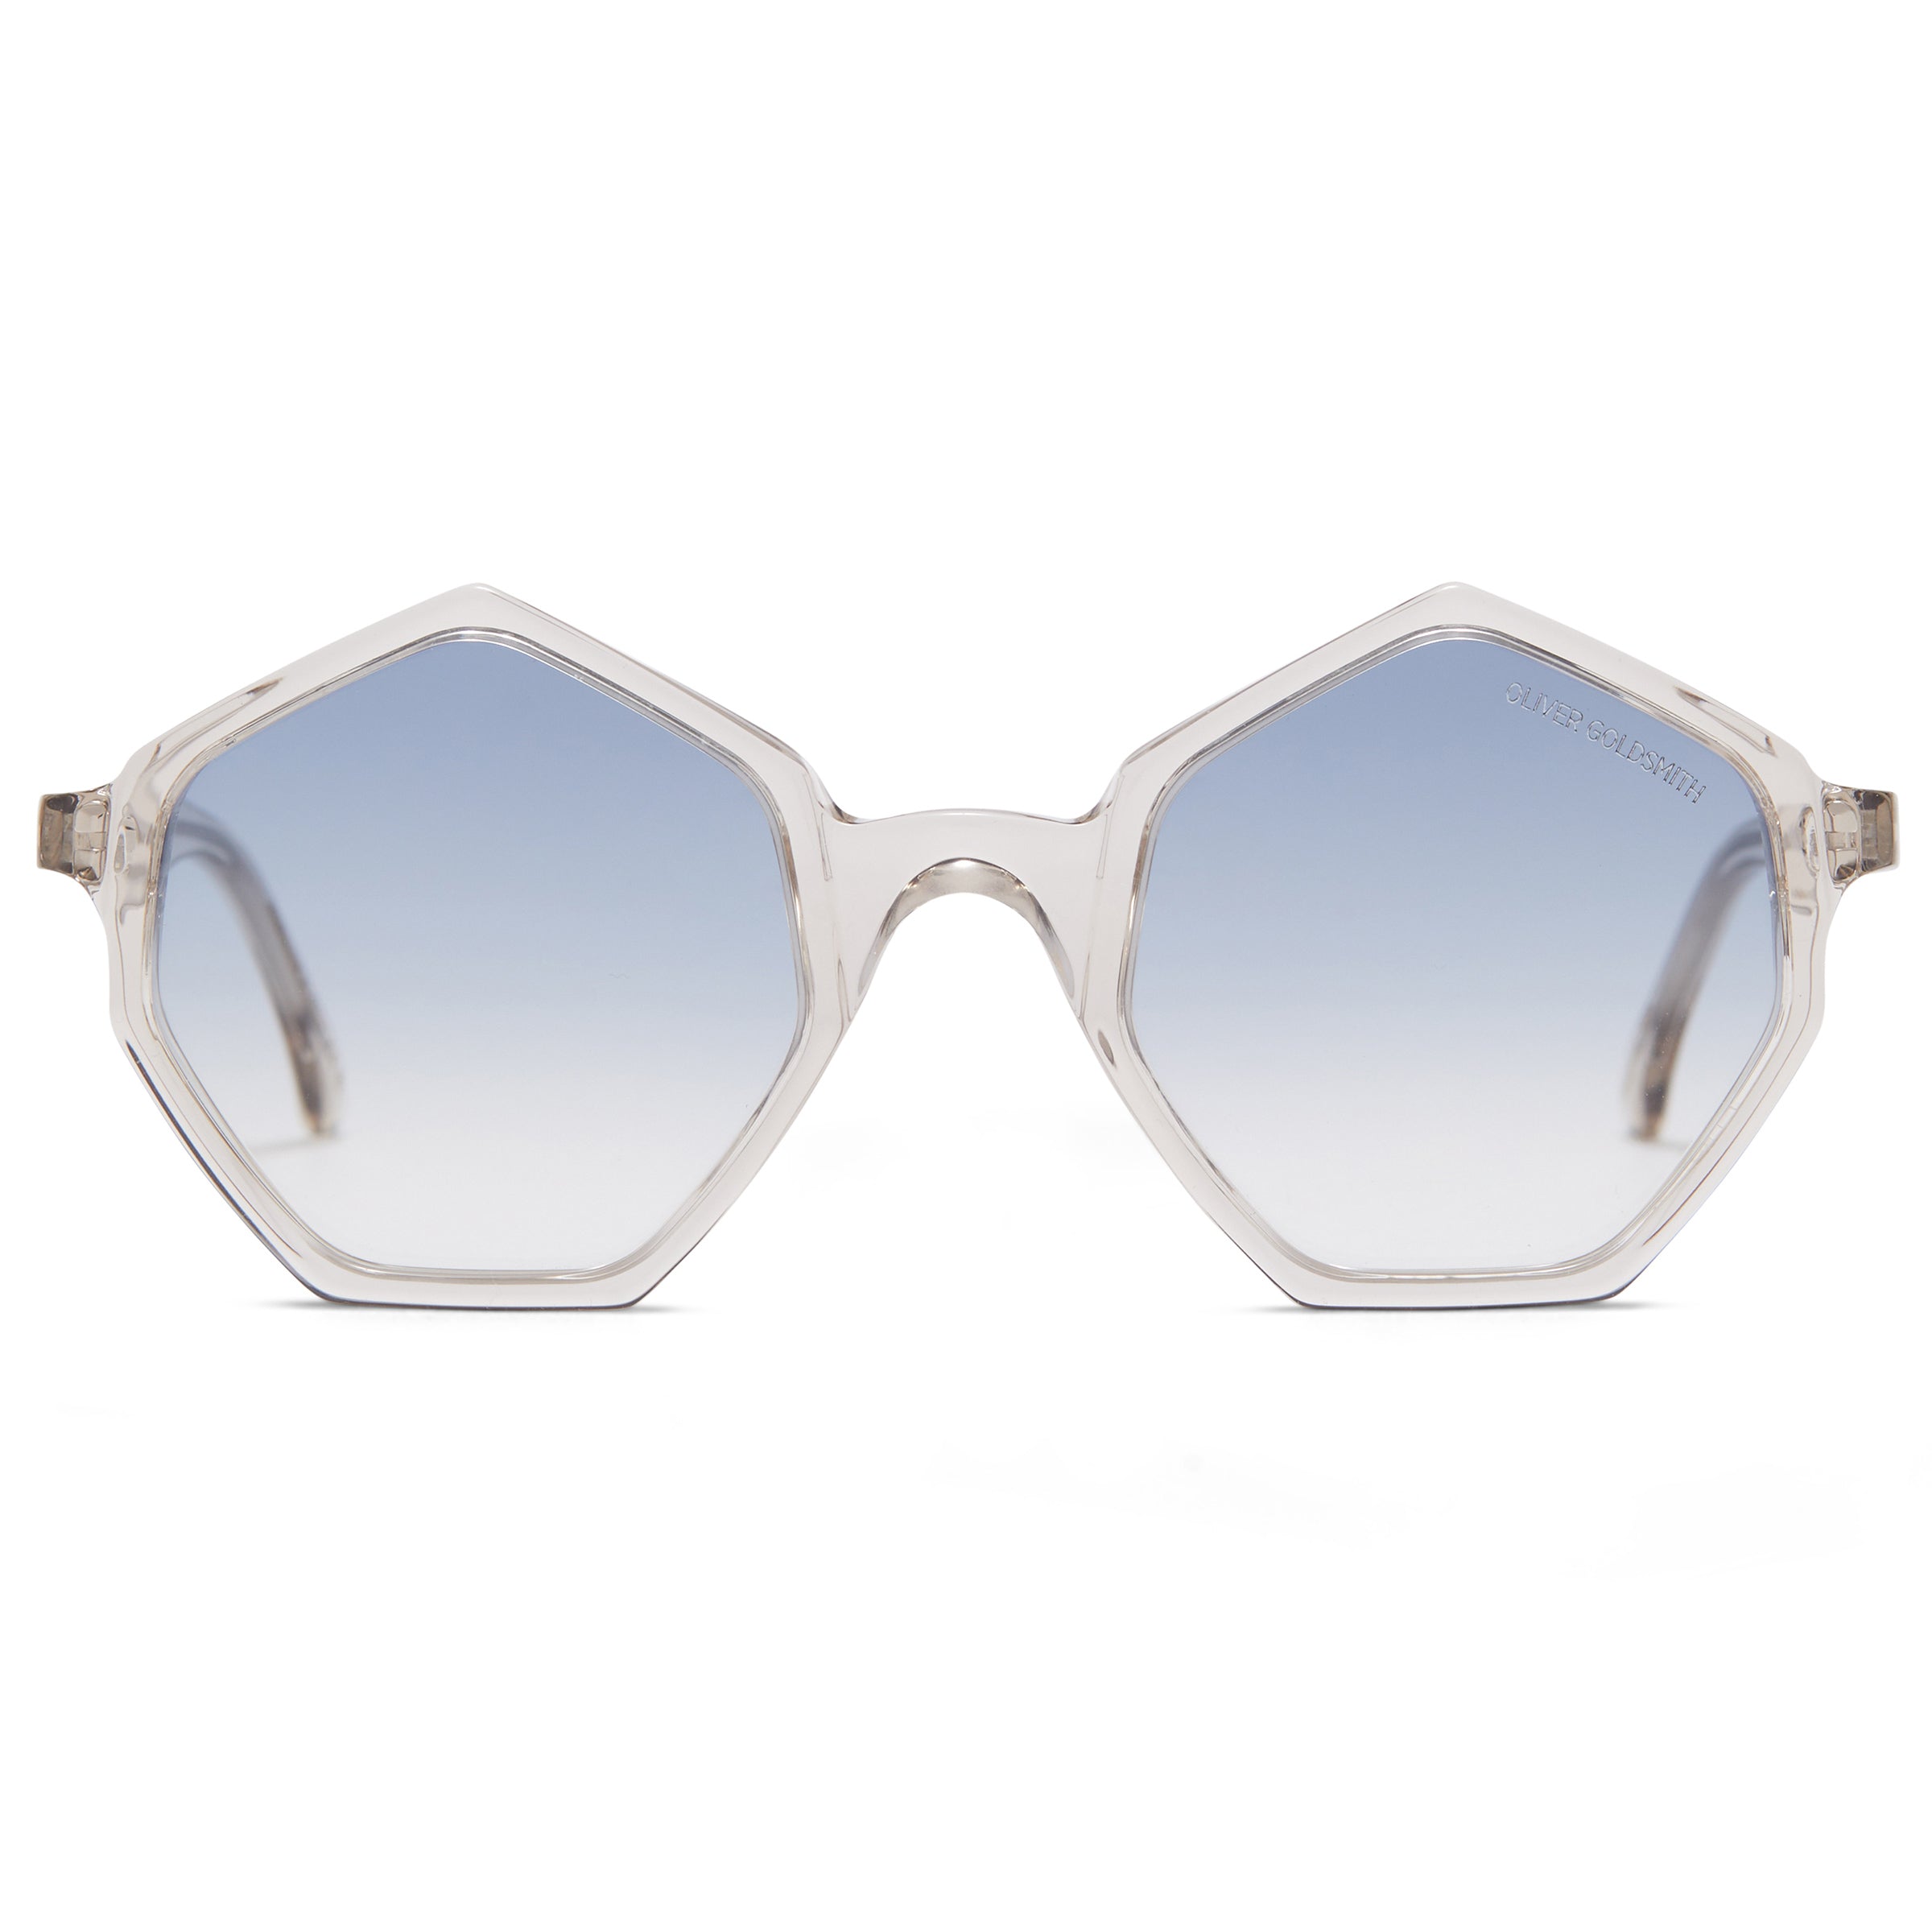 Transparent Framed Hexagon Sunglasses with light blue lens Tint